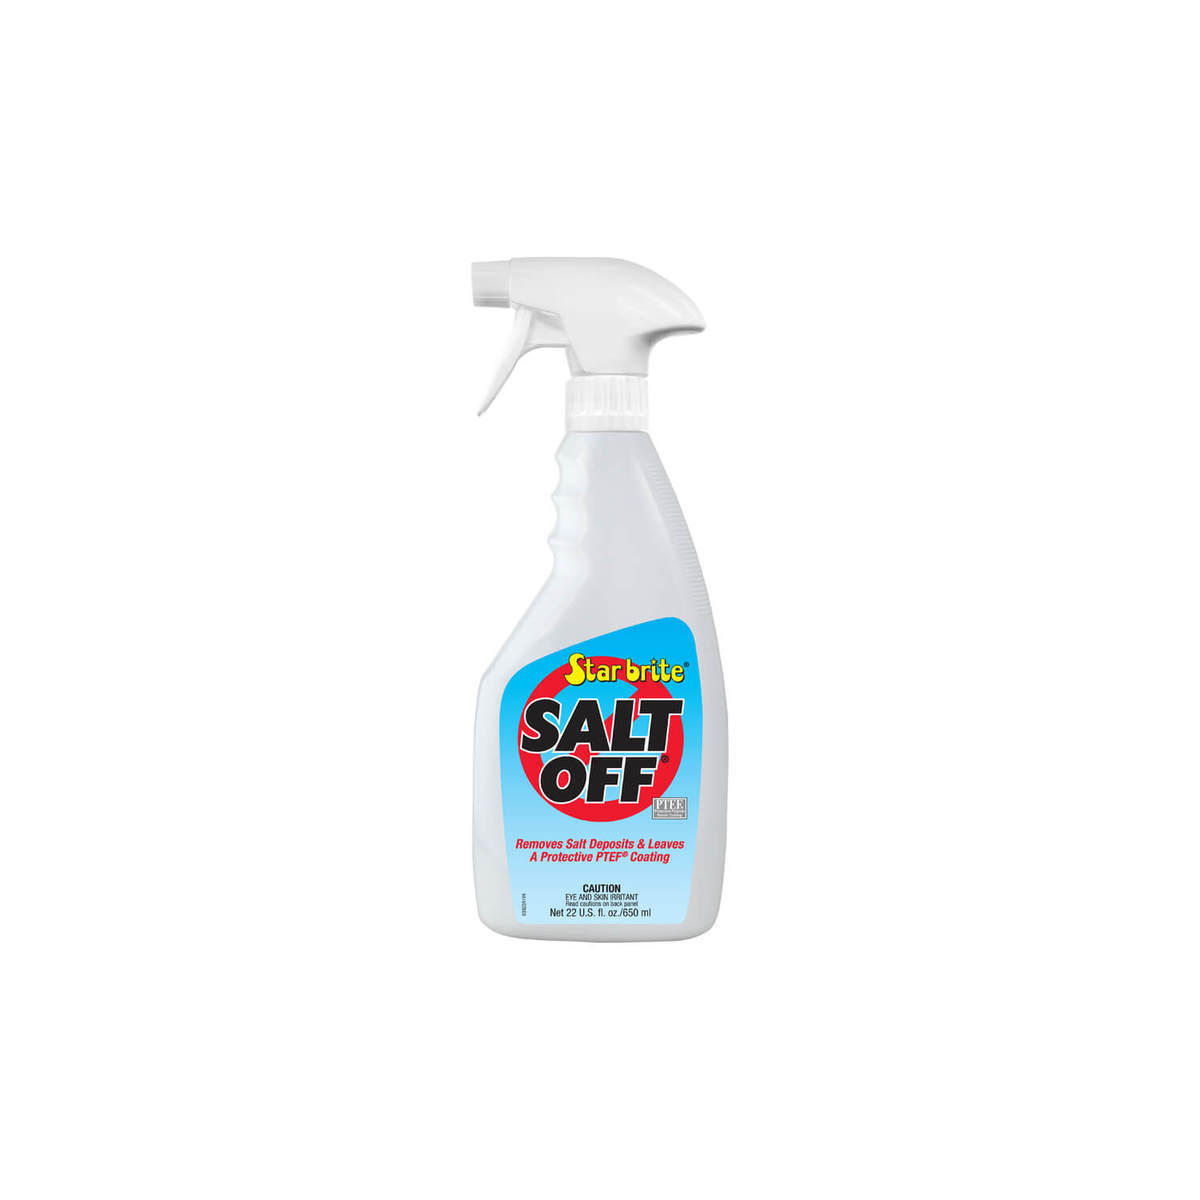 Star brite Salt Off Salt Removing Wash